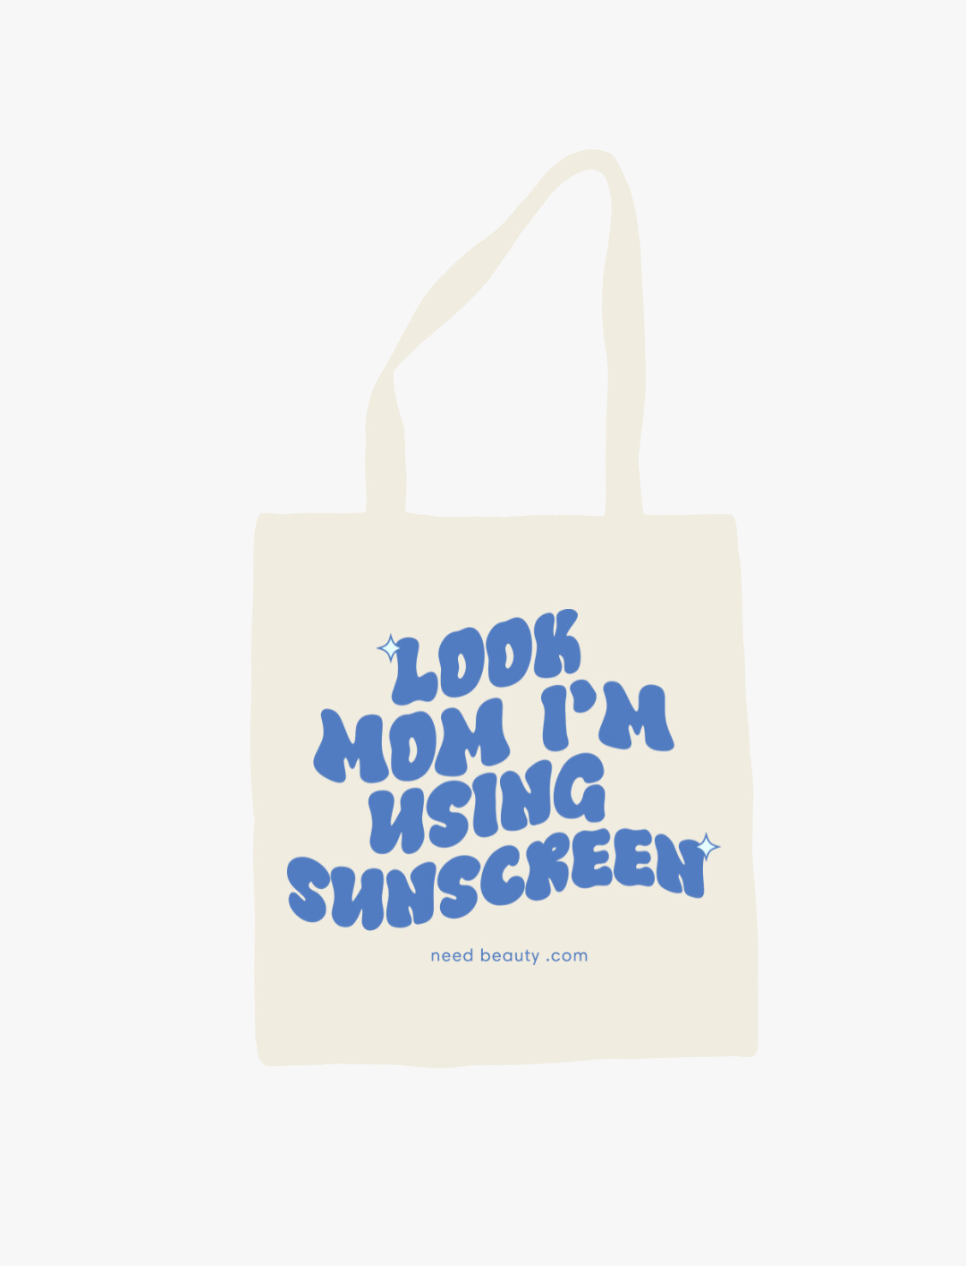 Tote Bag Edición Limitada - Look Mom I'm Using Sunscreen